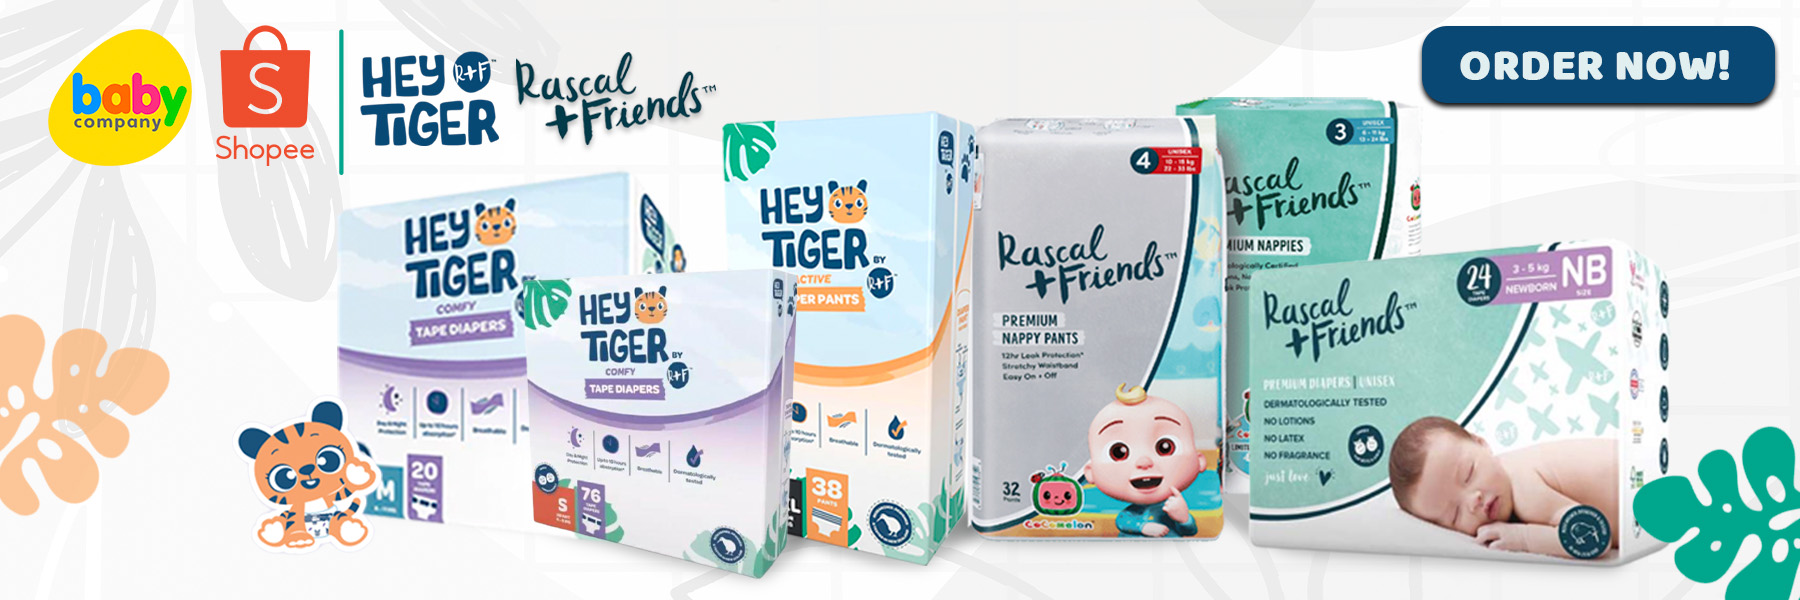 Rascal + Friends Diapers Pants Convenience Pack - Medium, 16 pads